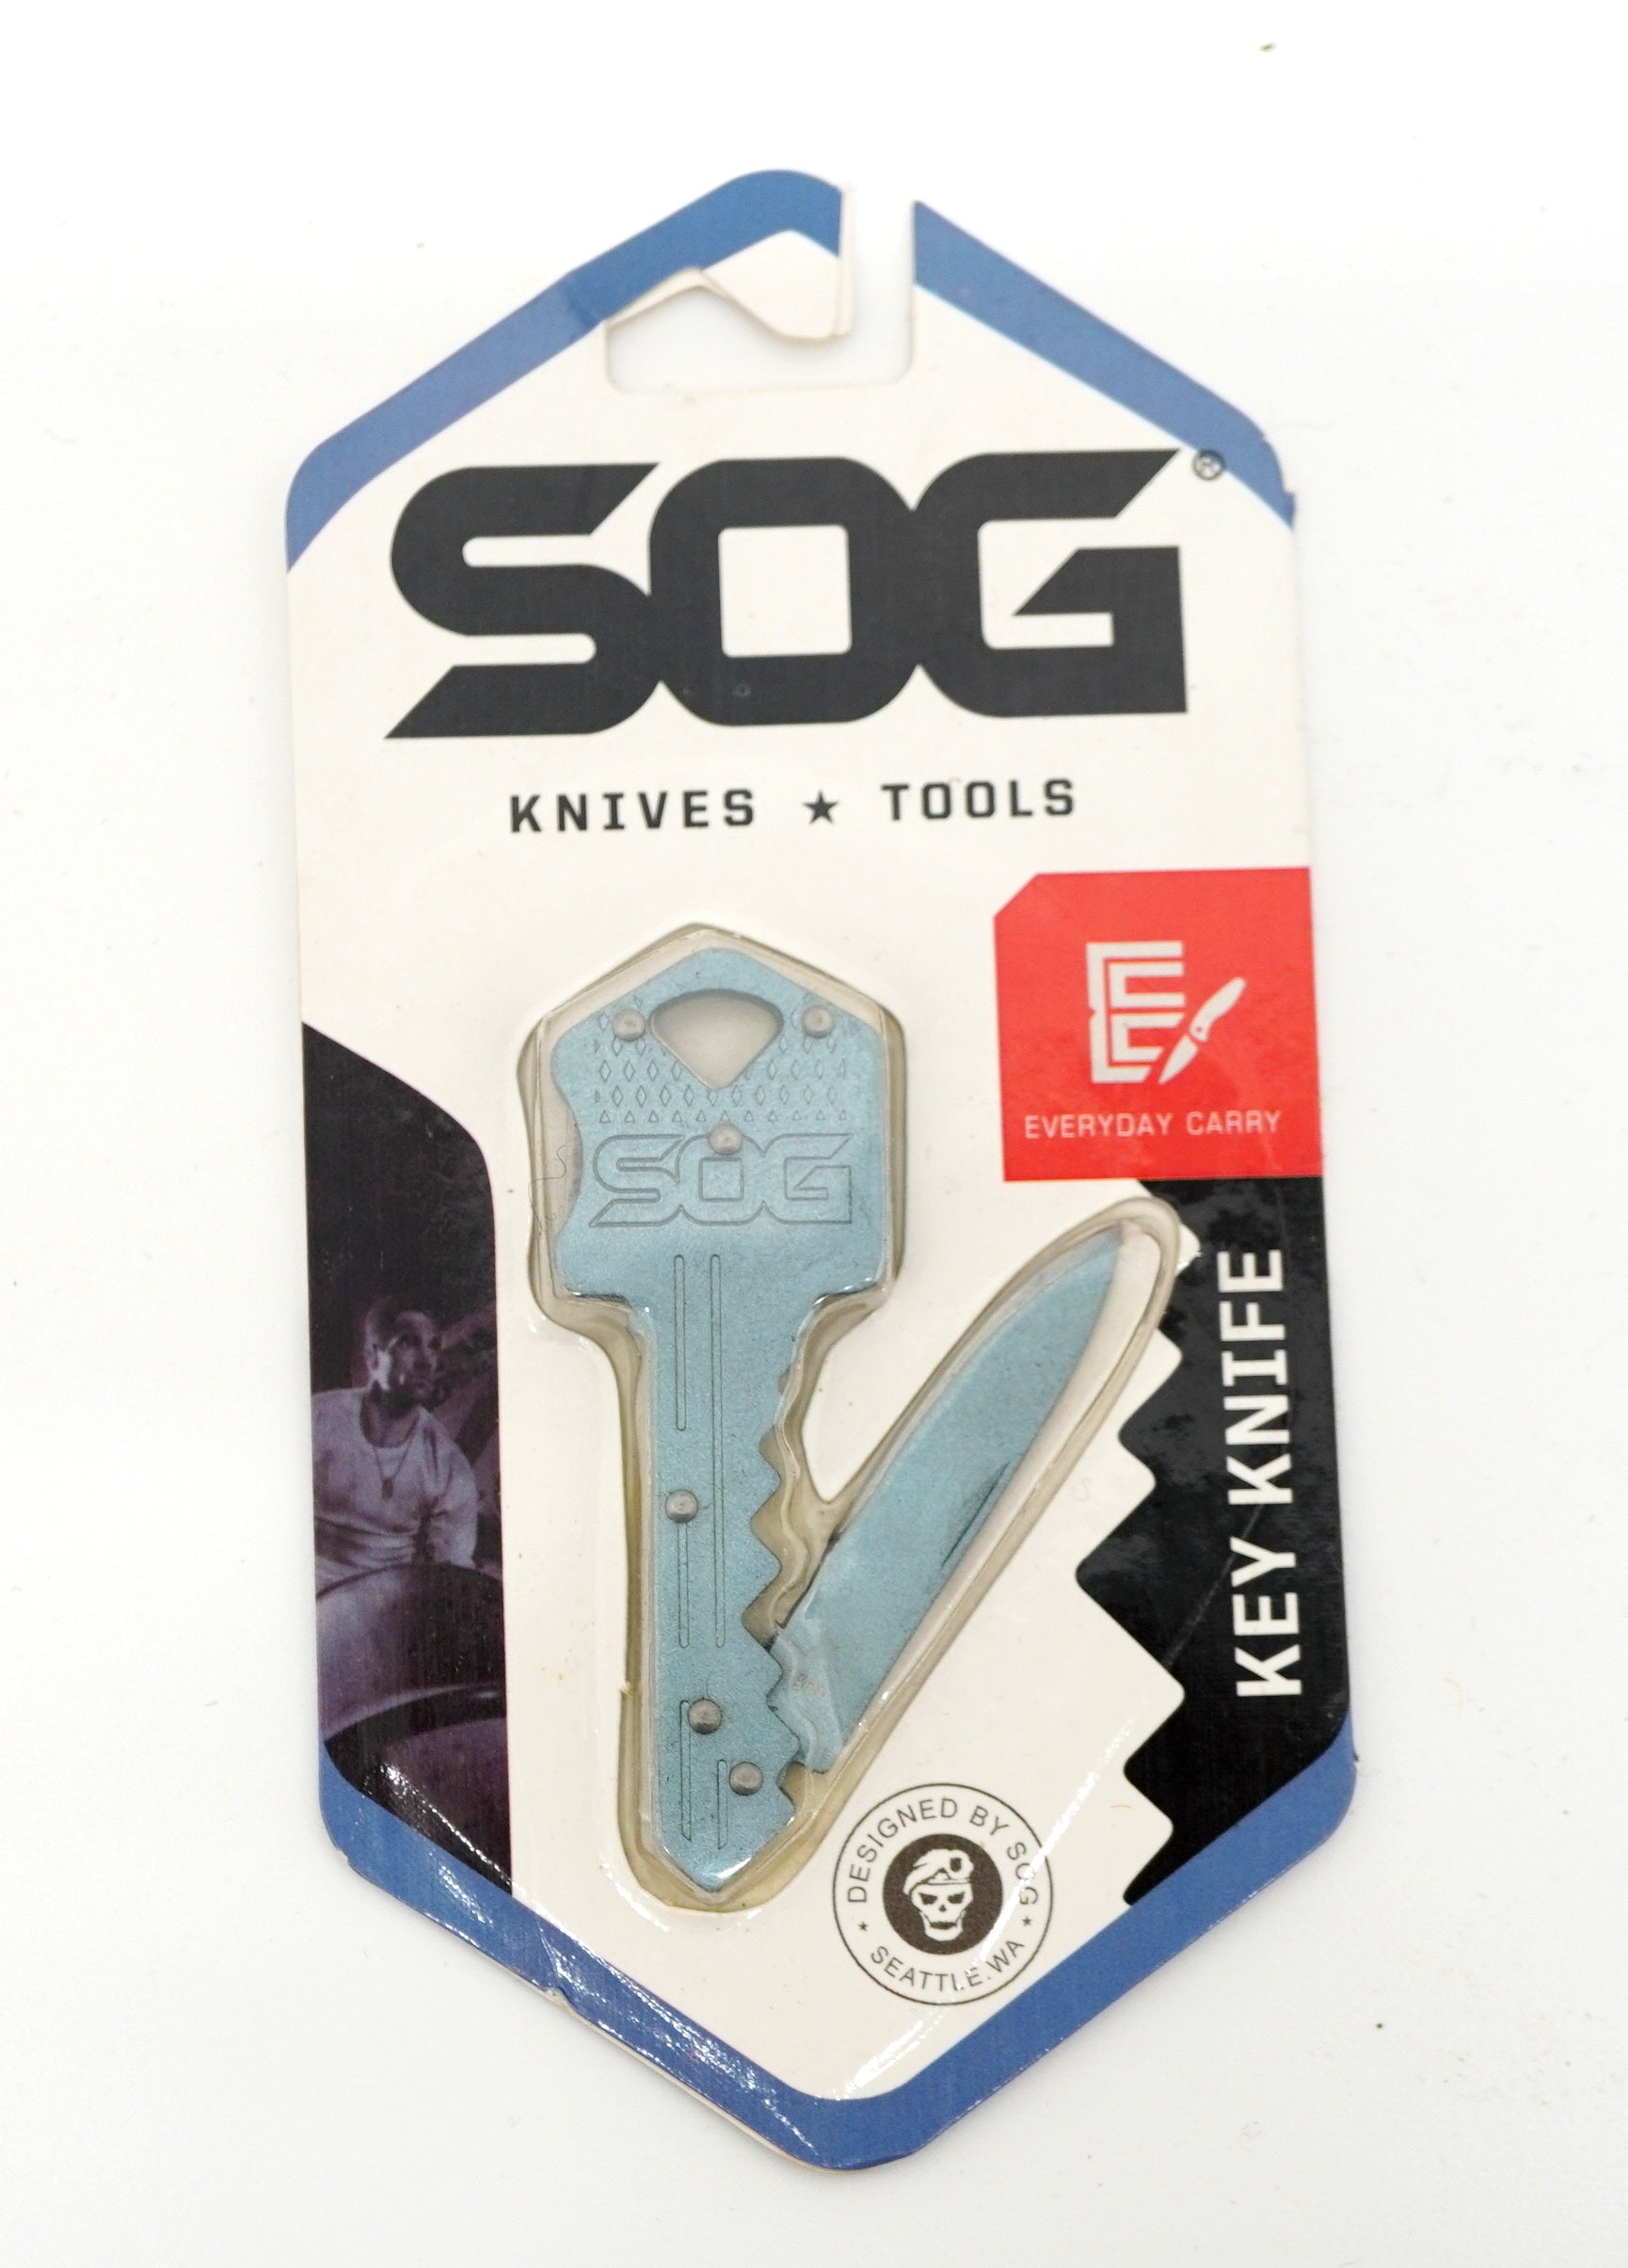 BLUE SOG Key Knife